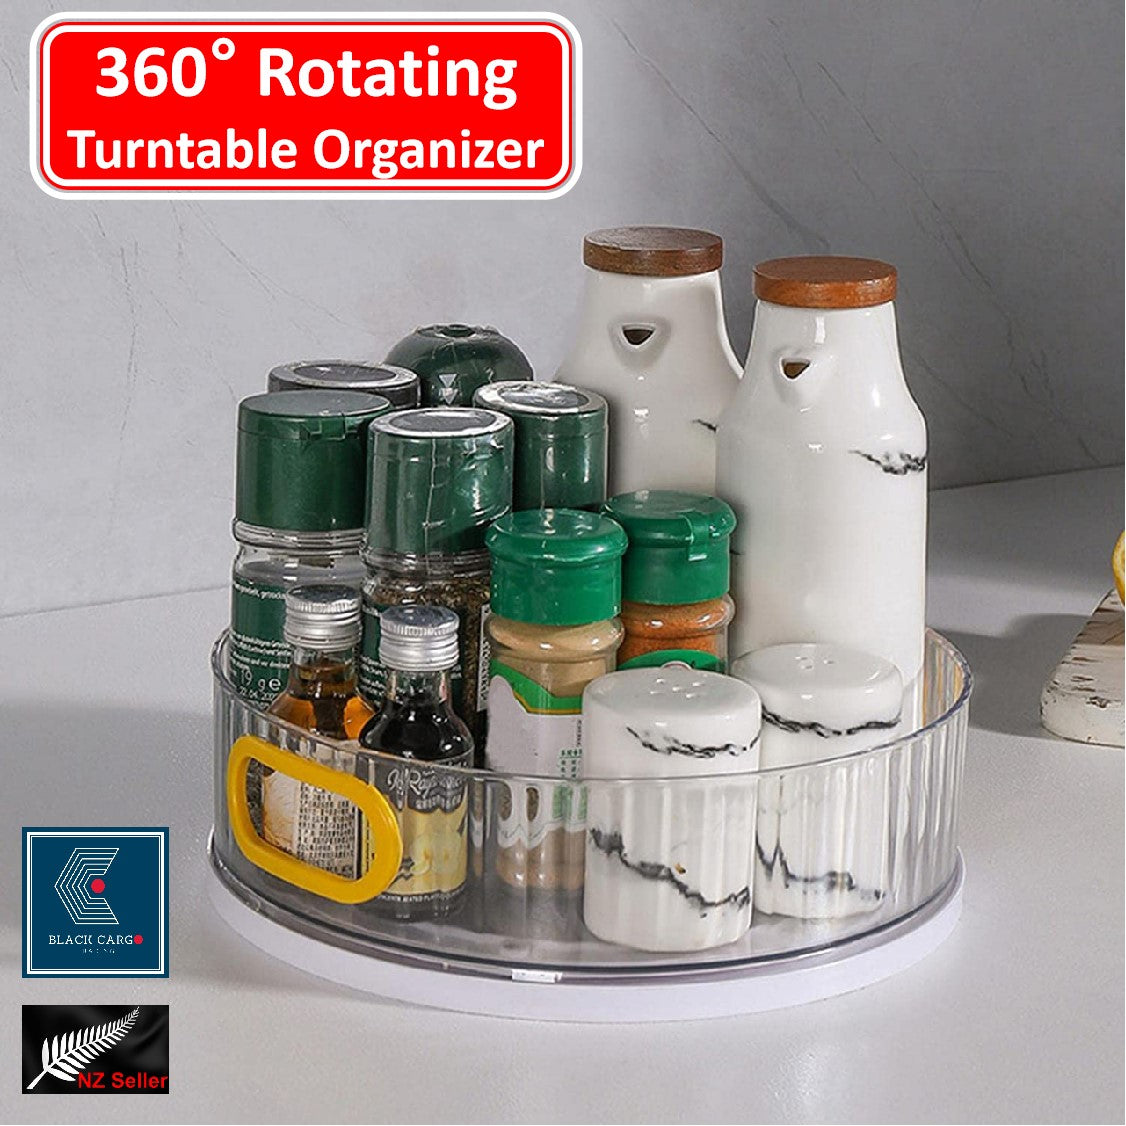 360° Rotating Turntable Organizer Spice Seasoning Cosmetic Storage Lazy Susan - Referdeal